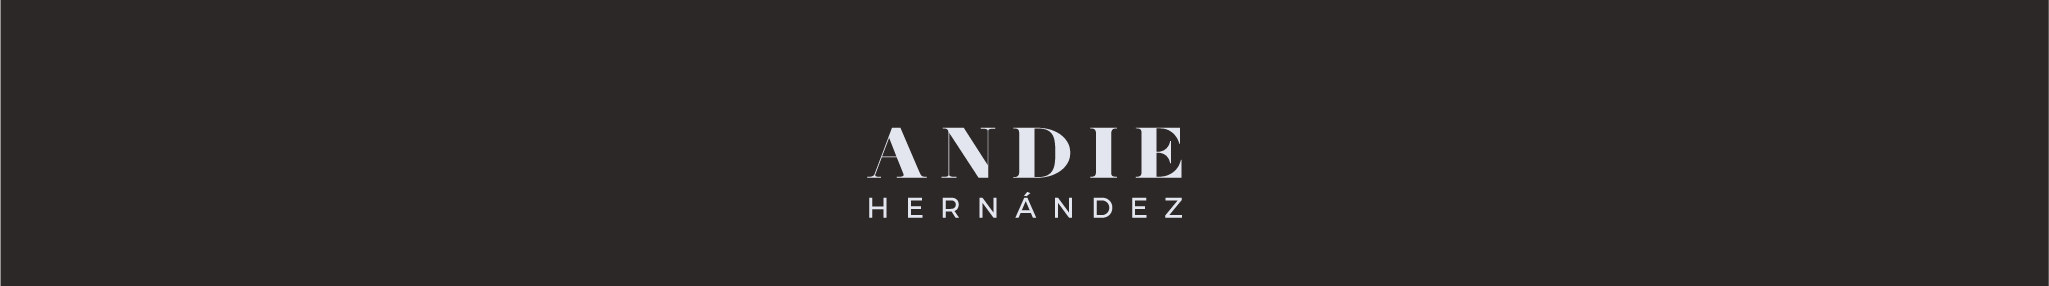 Andie Hernández's profile banner